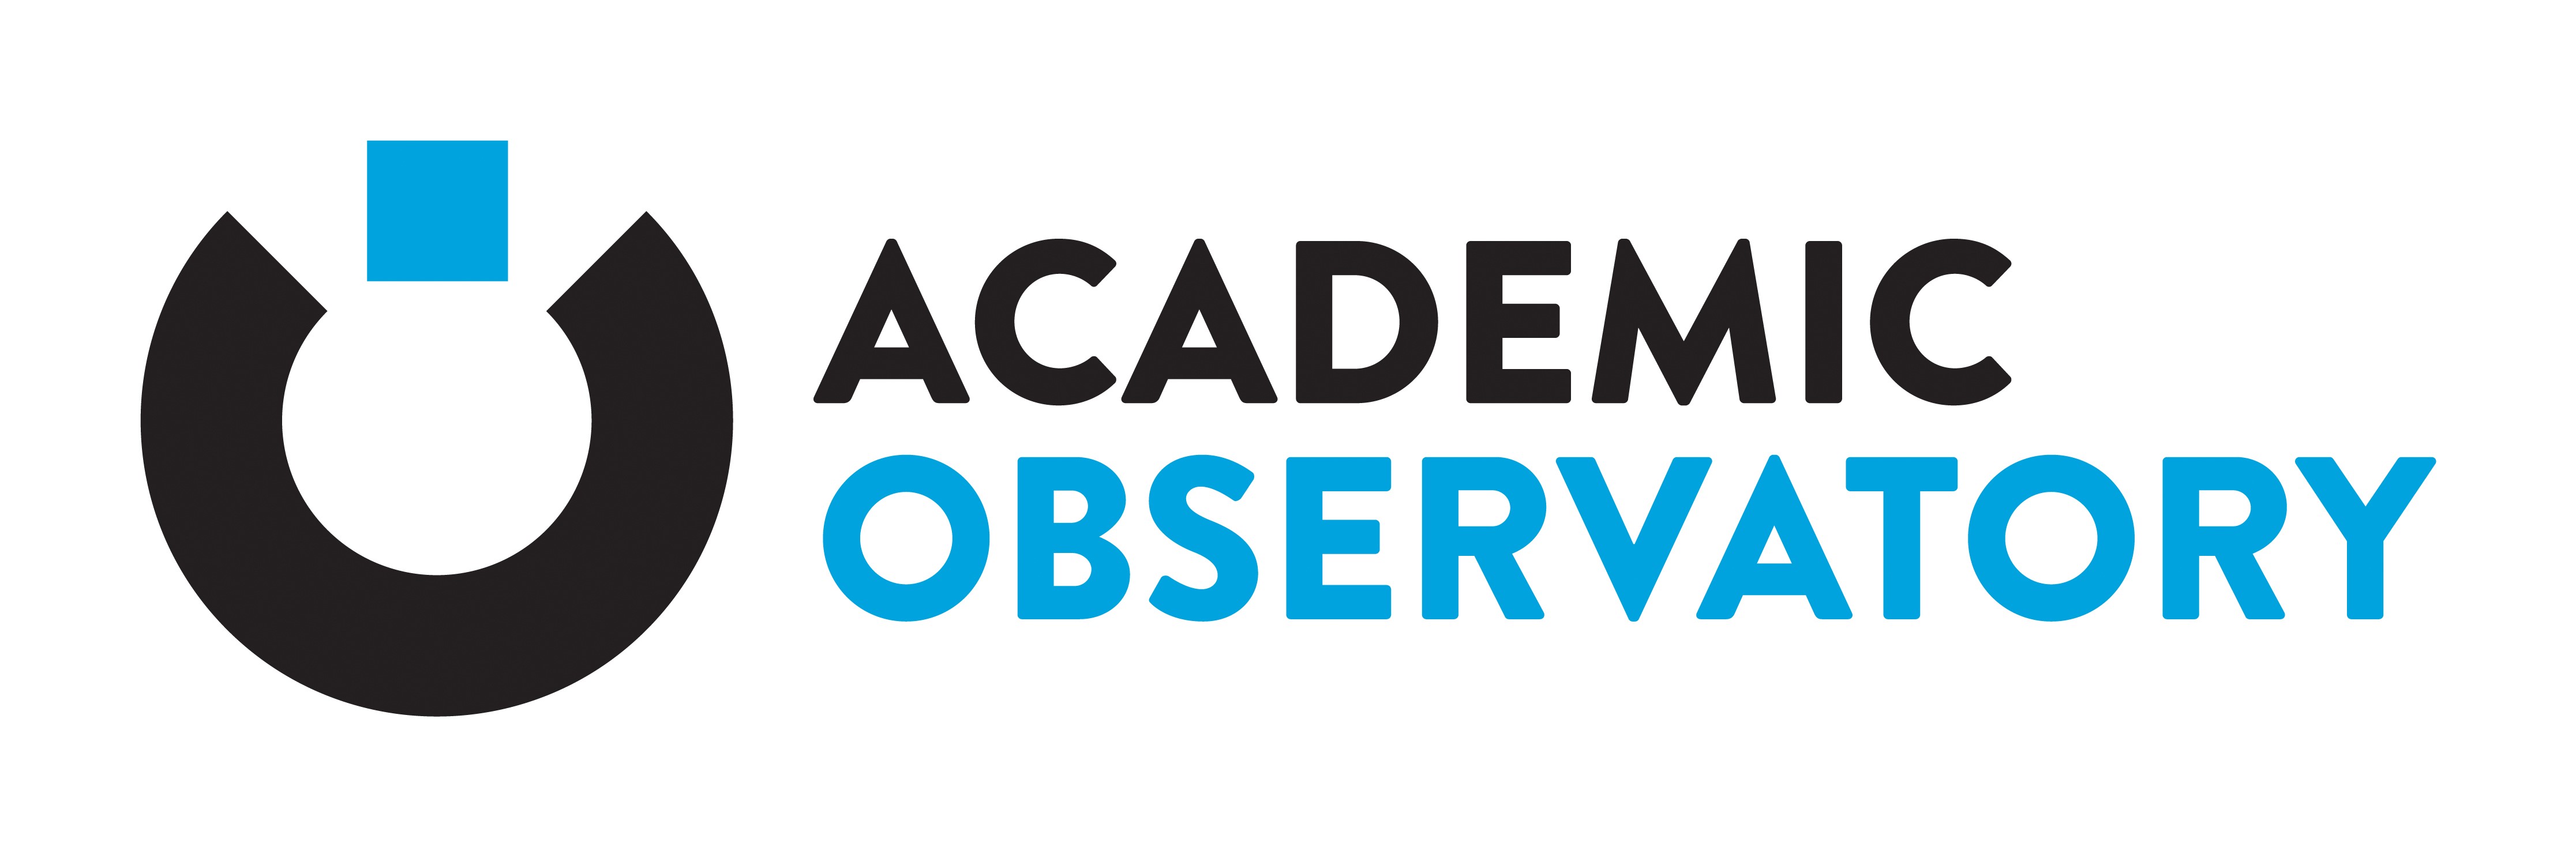 Academic Observatory Workflows